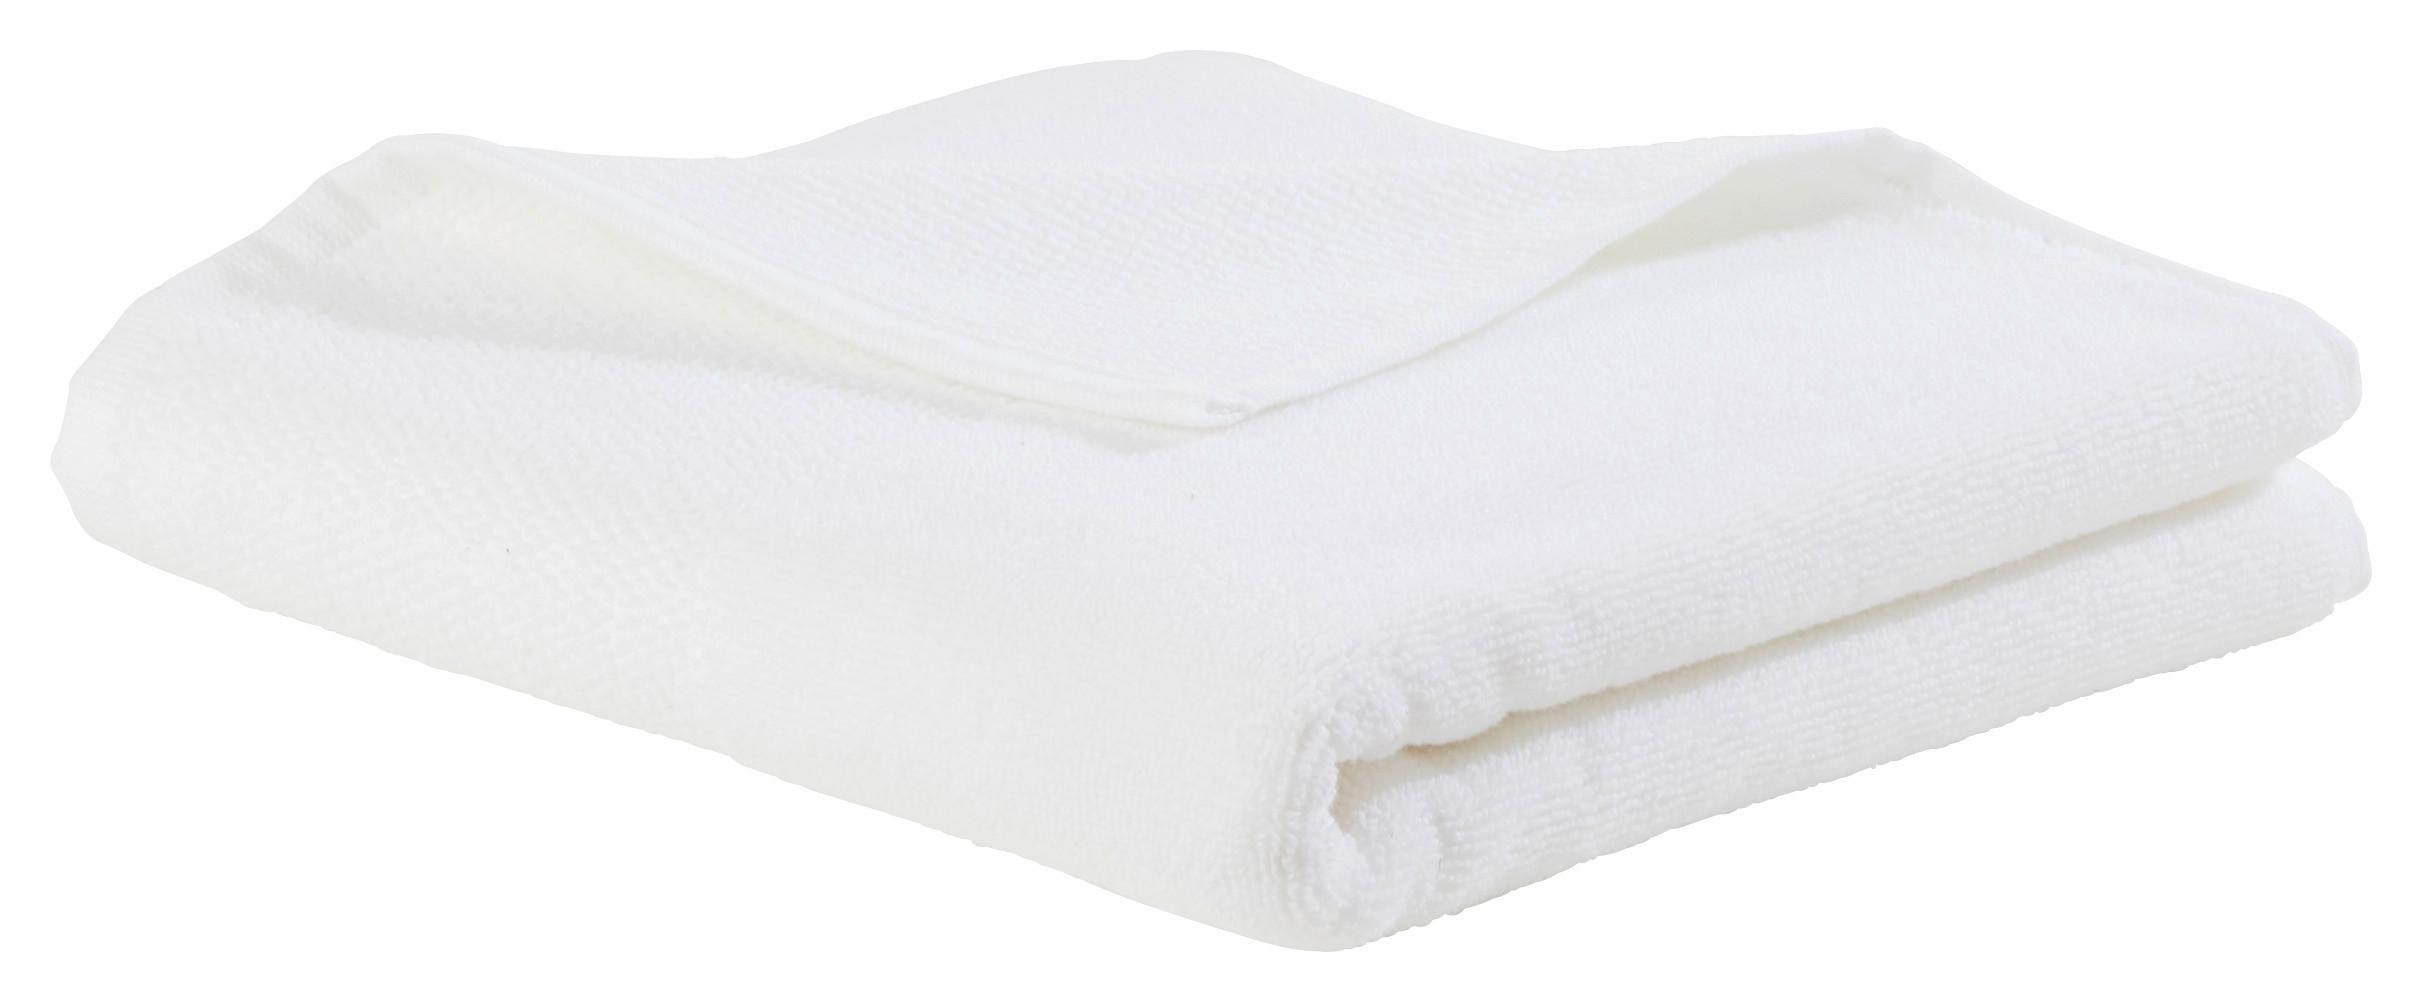 Brisača Olivia - bela, Konvencionalno, tekstil (50/100cm) - Premium Living